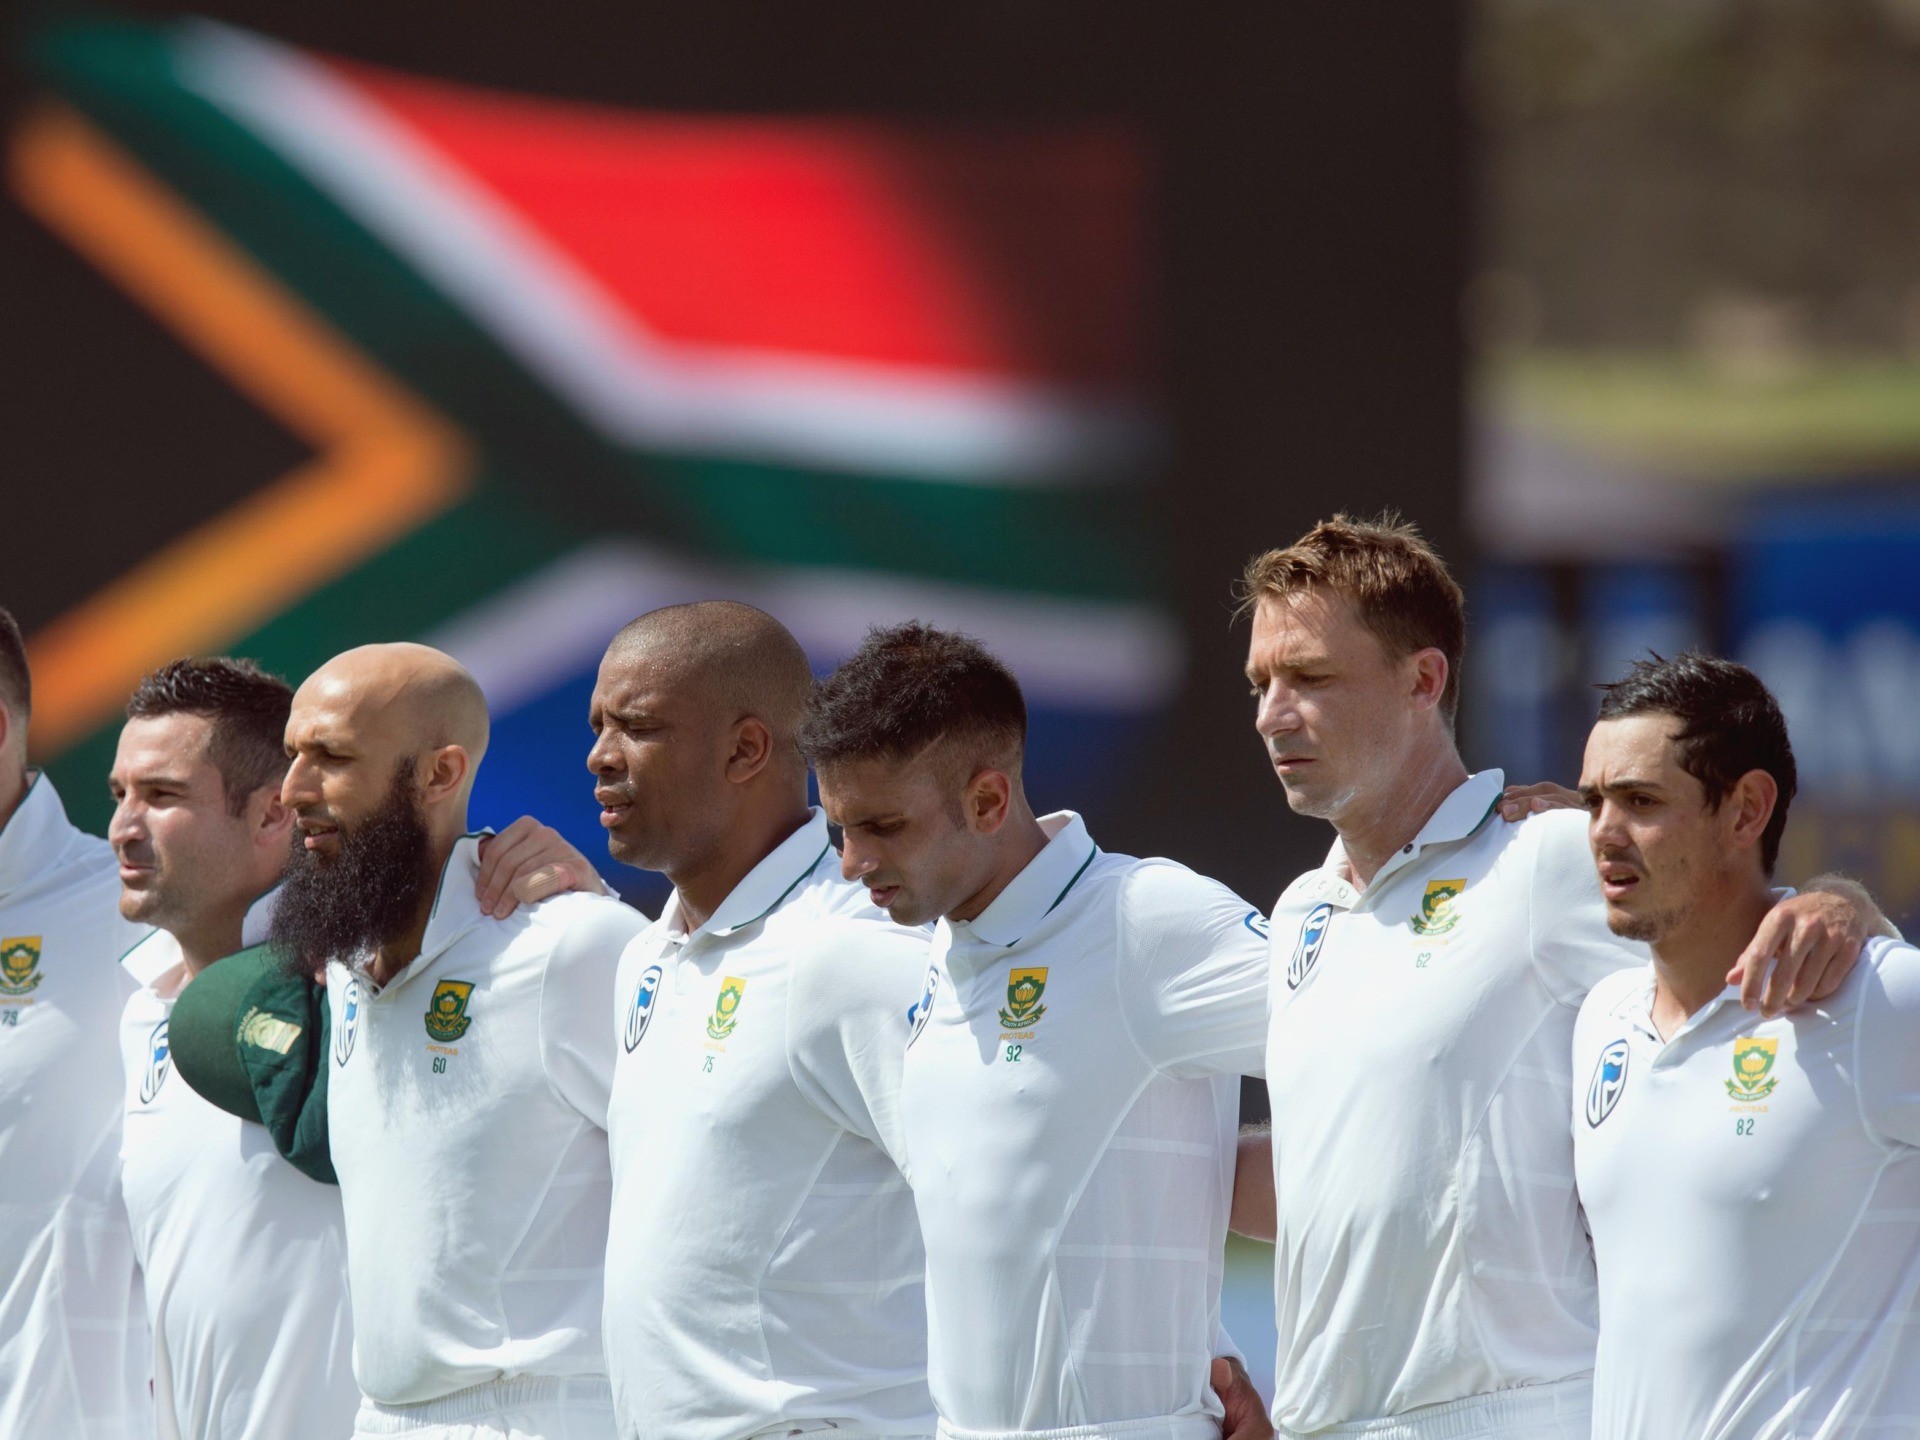 Quinton de Kock South Africa flag anthem (Isuru Sameera Peiris / AFP / Getty)